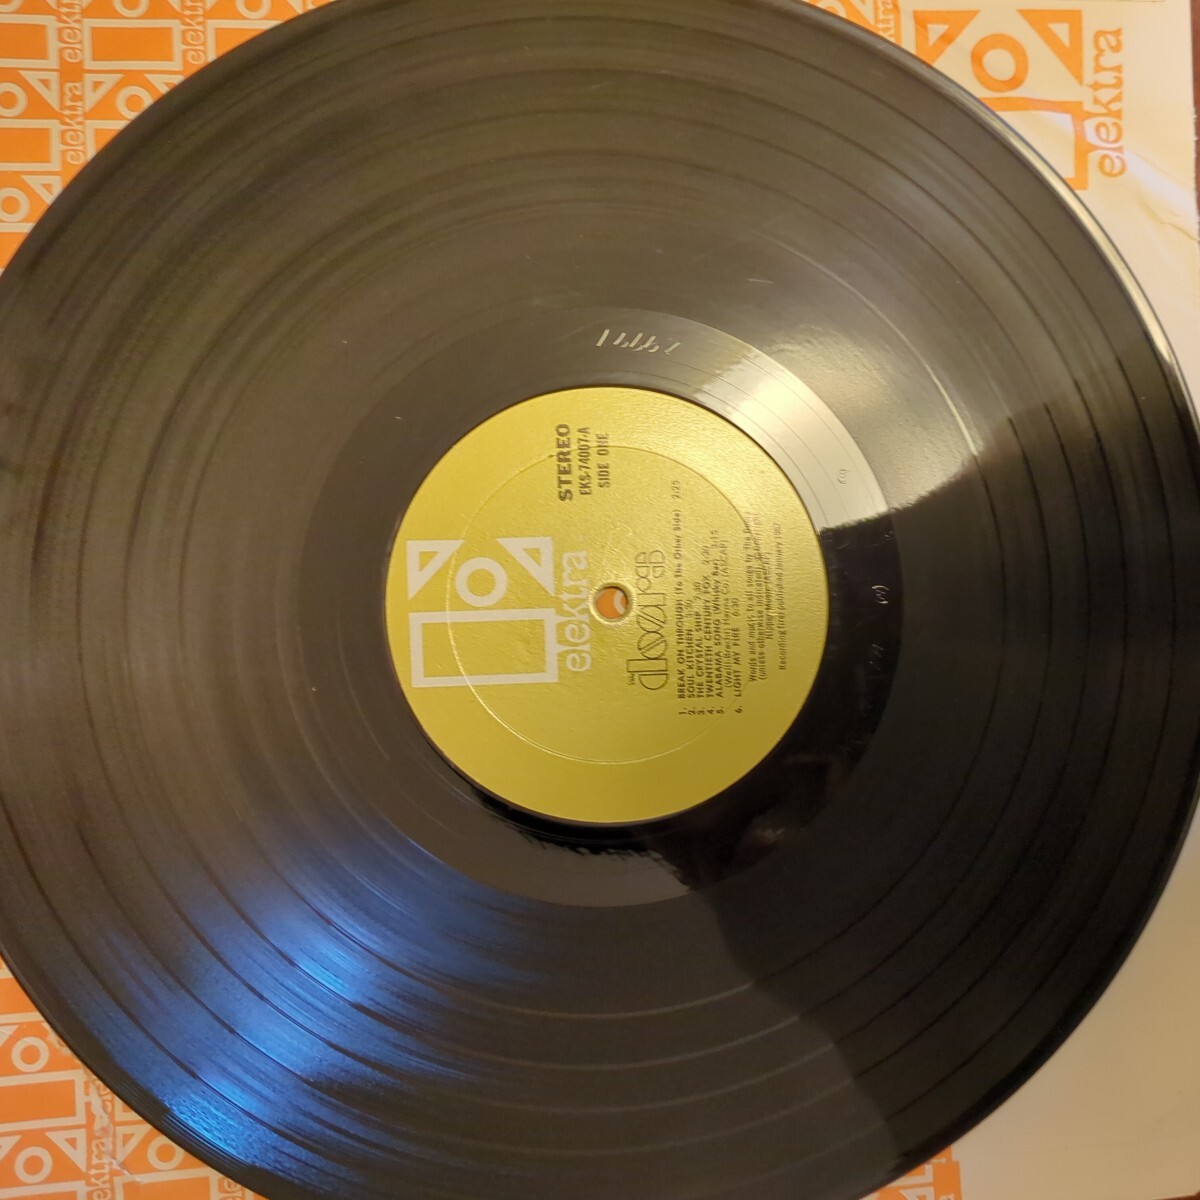 US original doors ドアーズ gold analog record レコード LP アナログ vinyl_画像7